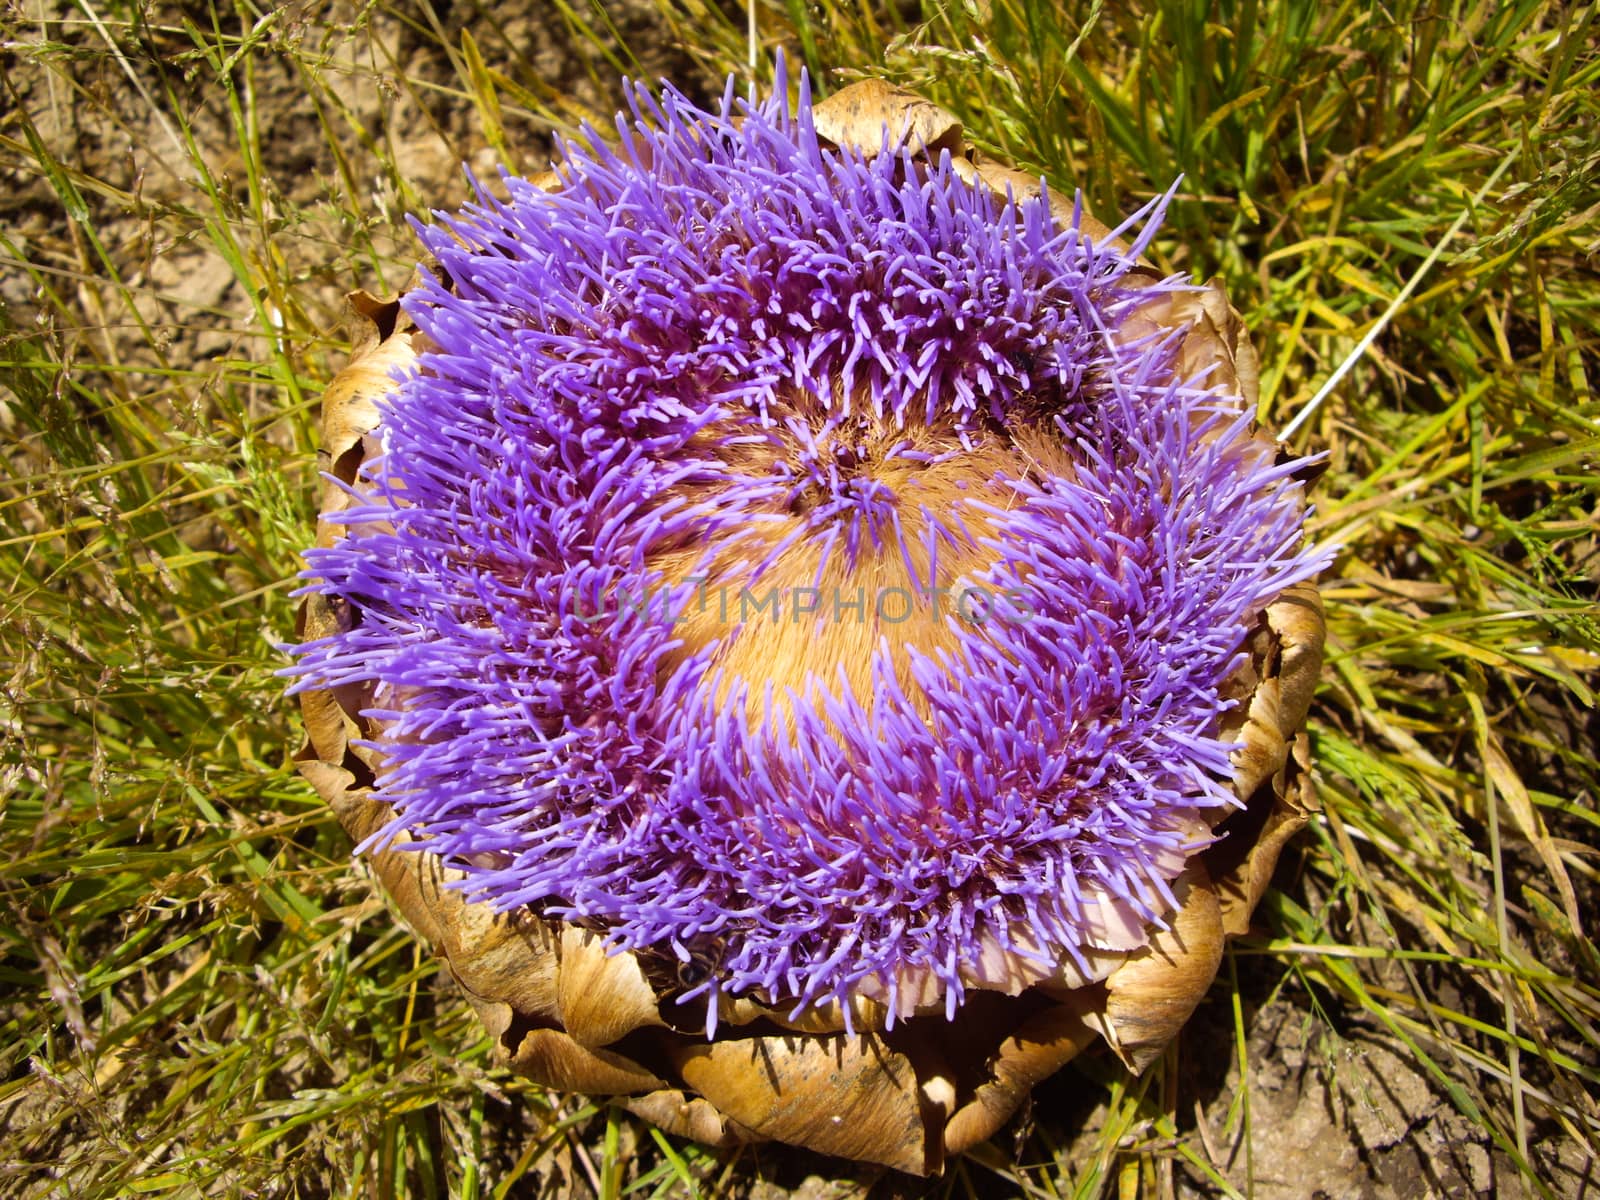 Decaying artichoke flowers purple by emattil